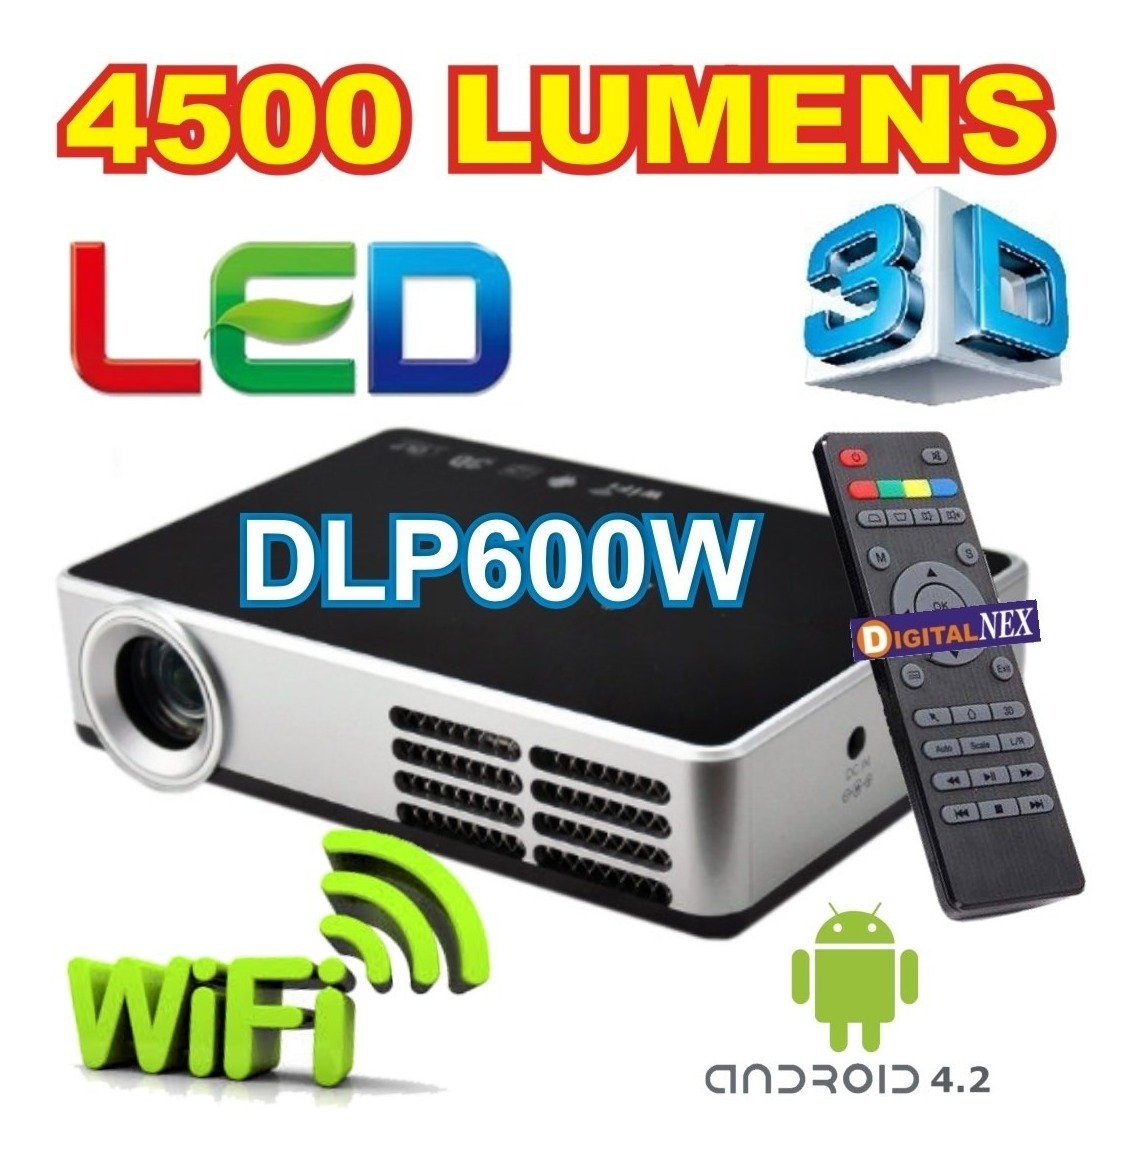 https://http2.mlstatic.com/proyector-led-portatil-4500-lumens-android-3d-wifi-cuotas-D_NQ_NP_849427-MLA31086091340_062019-F.jpg